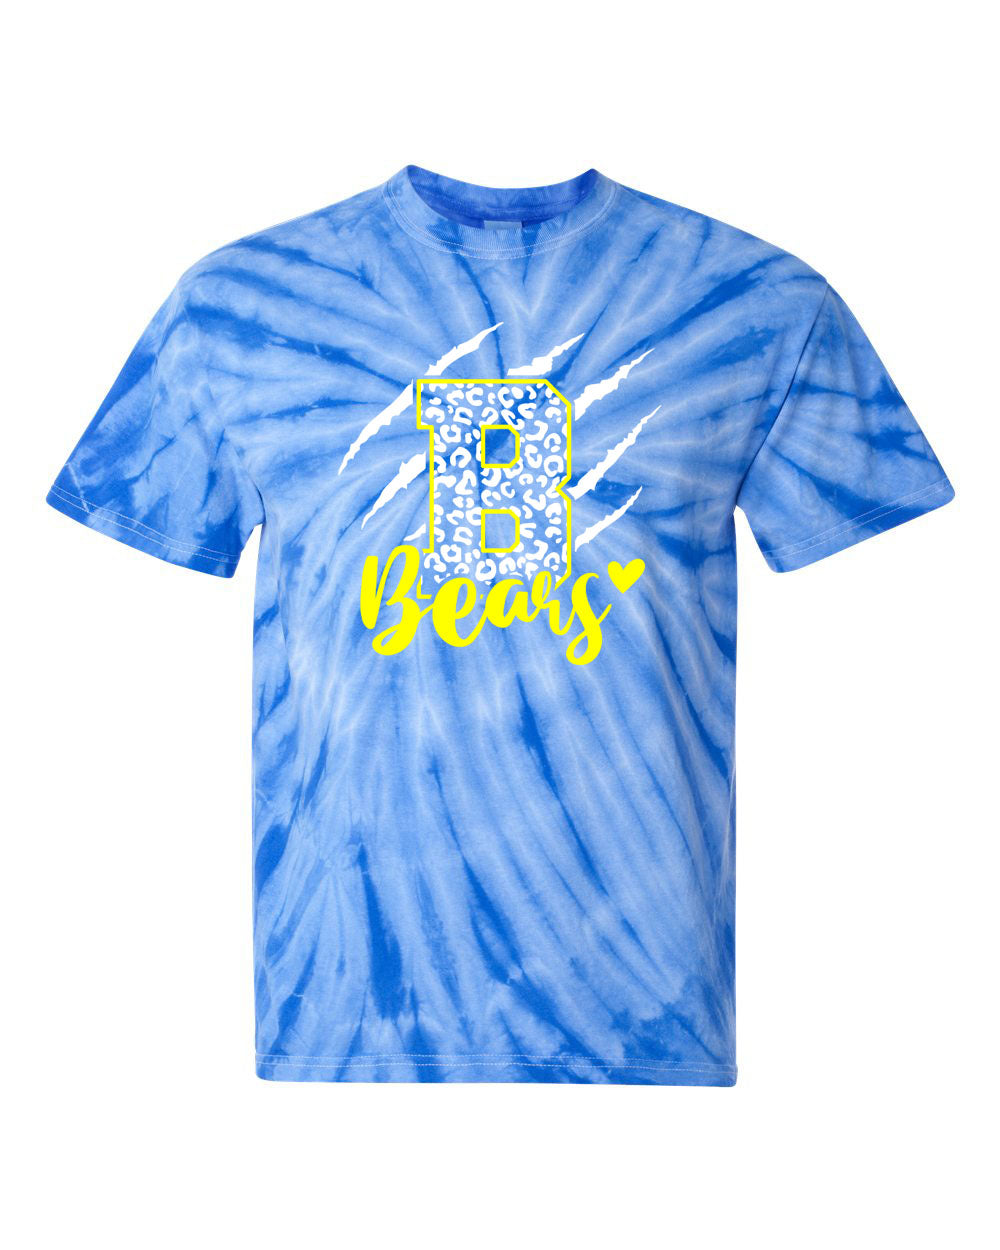 Blairstown Bears Tie Dye t-shirt Design 11